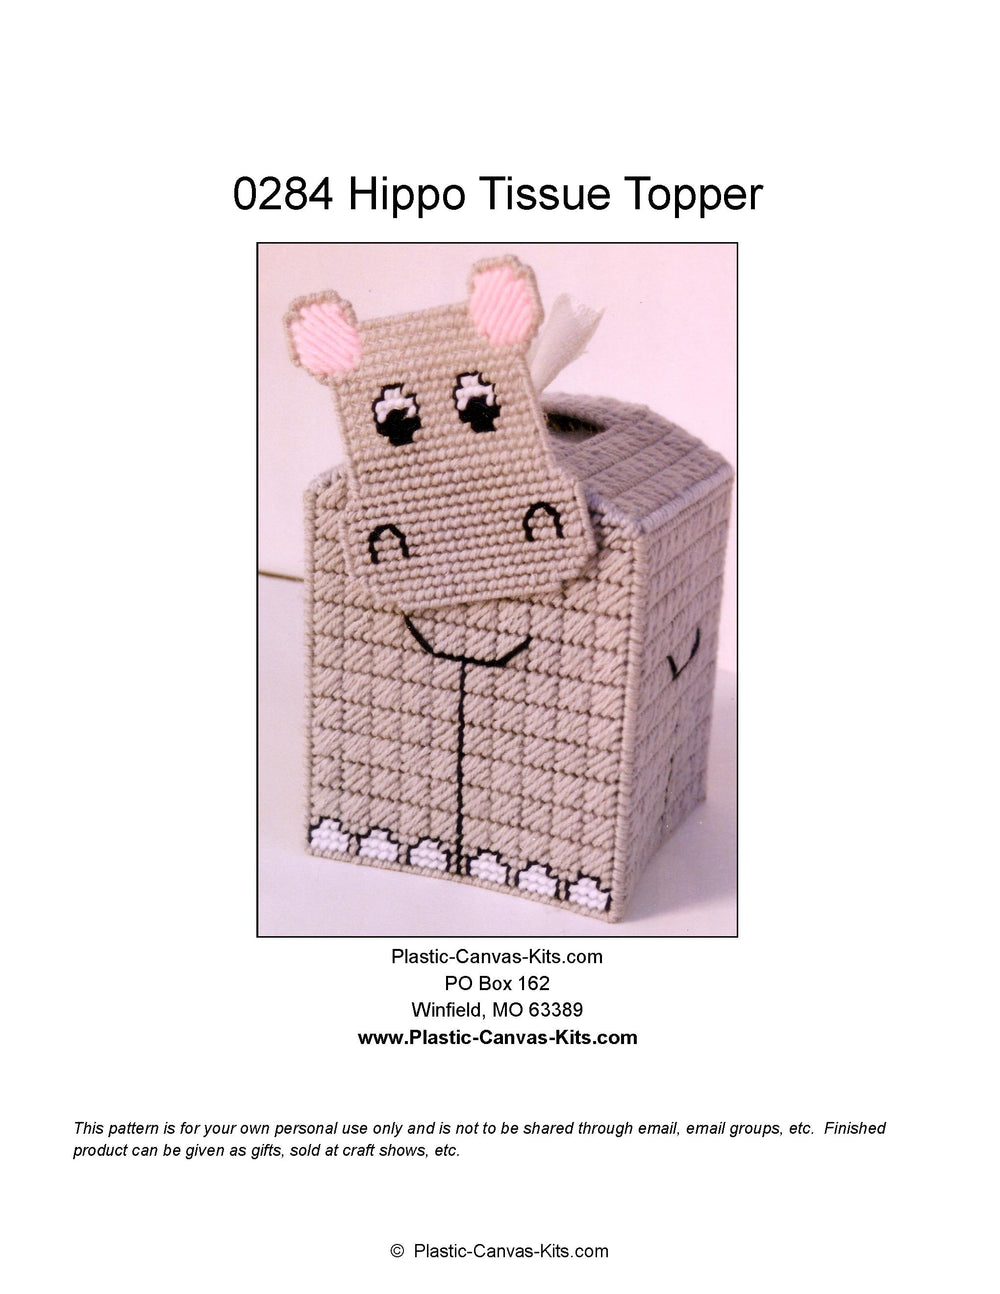 Hippo 3-D Tissue Topper